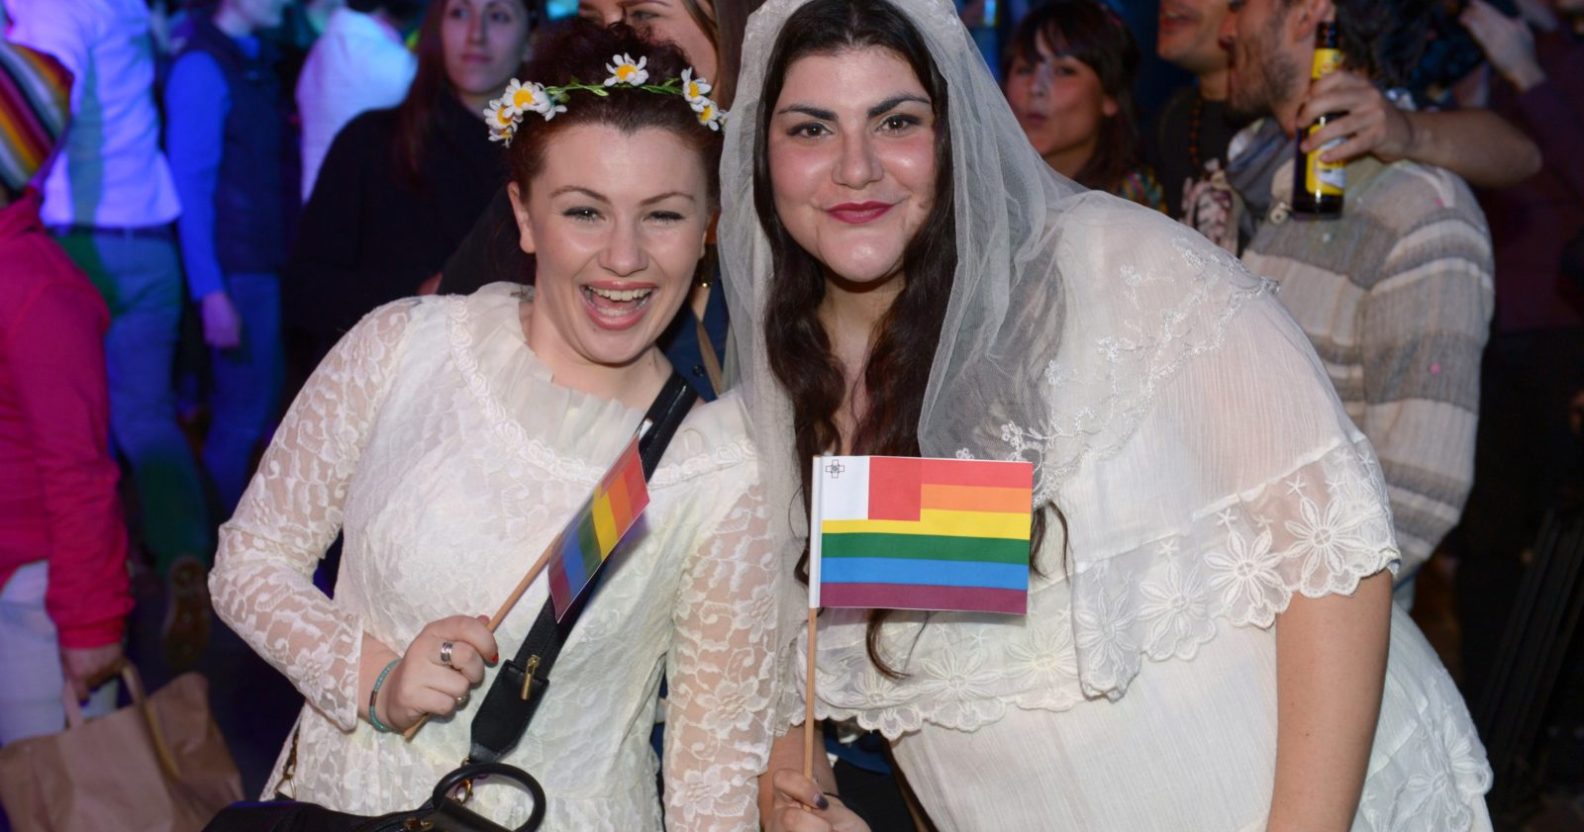 Couple celebrating same-sex marriage in Malta